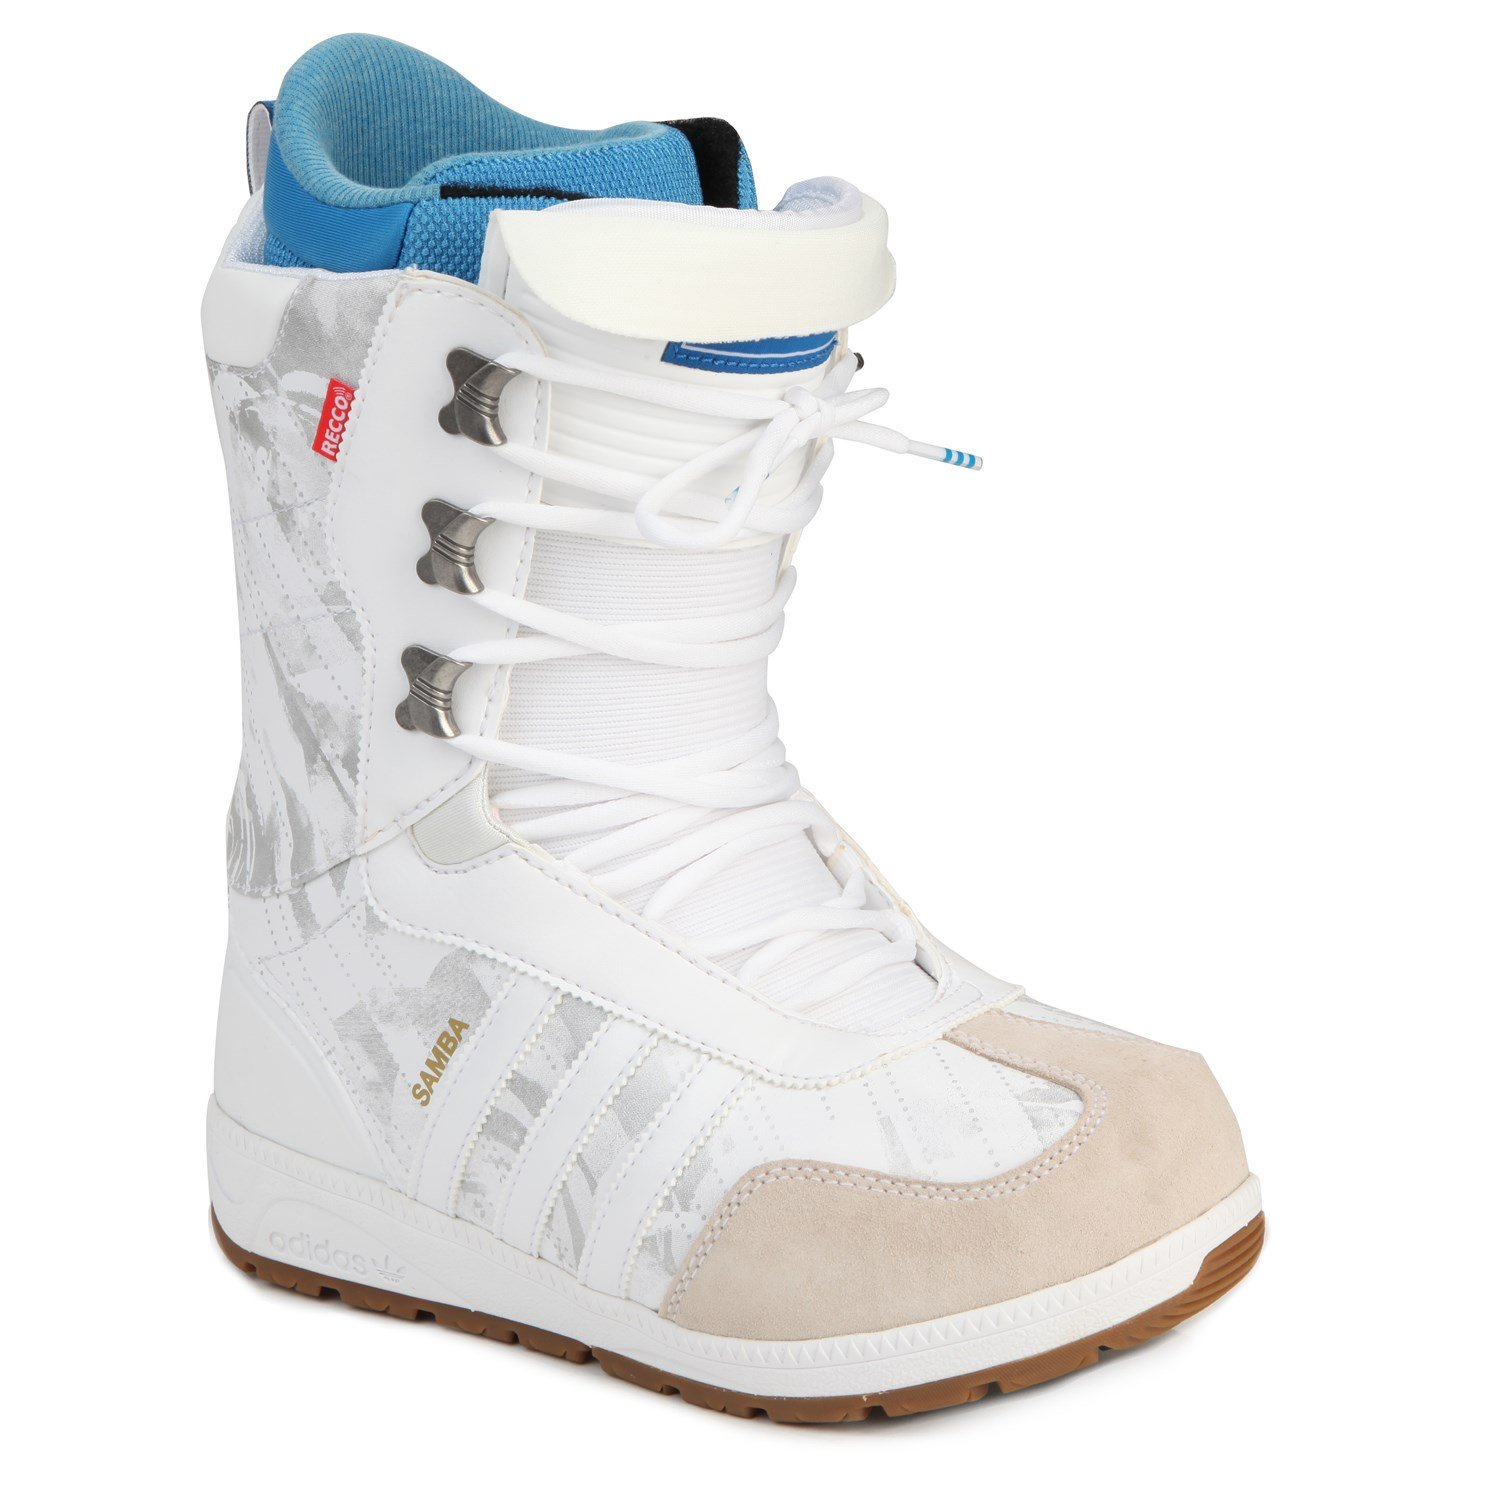 adidas samba snowboard boots